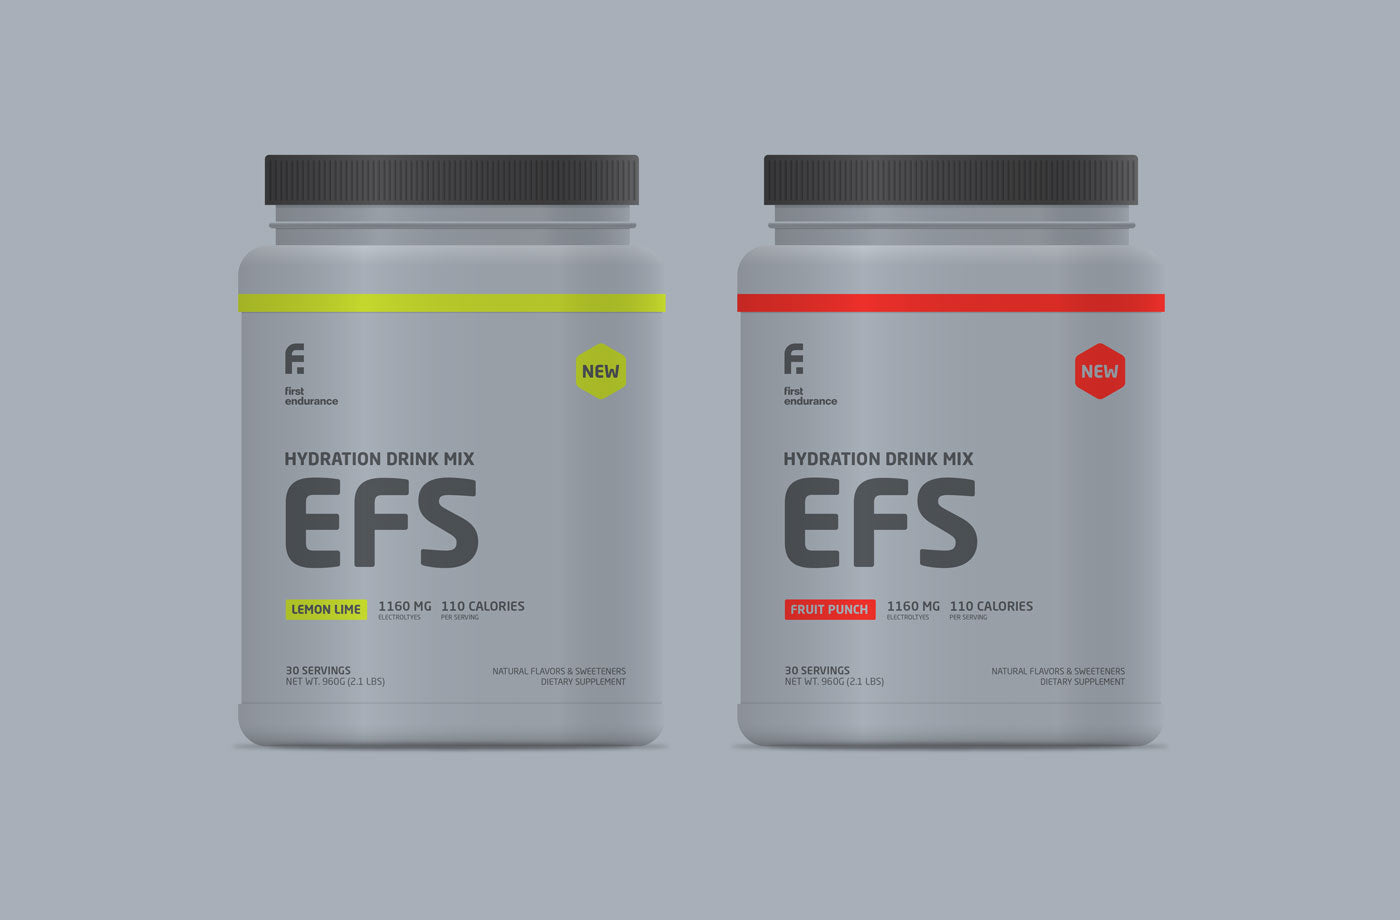 First Endurance EFS Premium Sports Energy Drink Mix 30 Serving